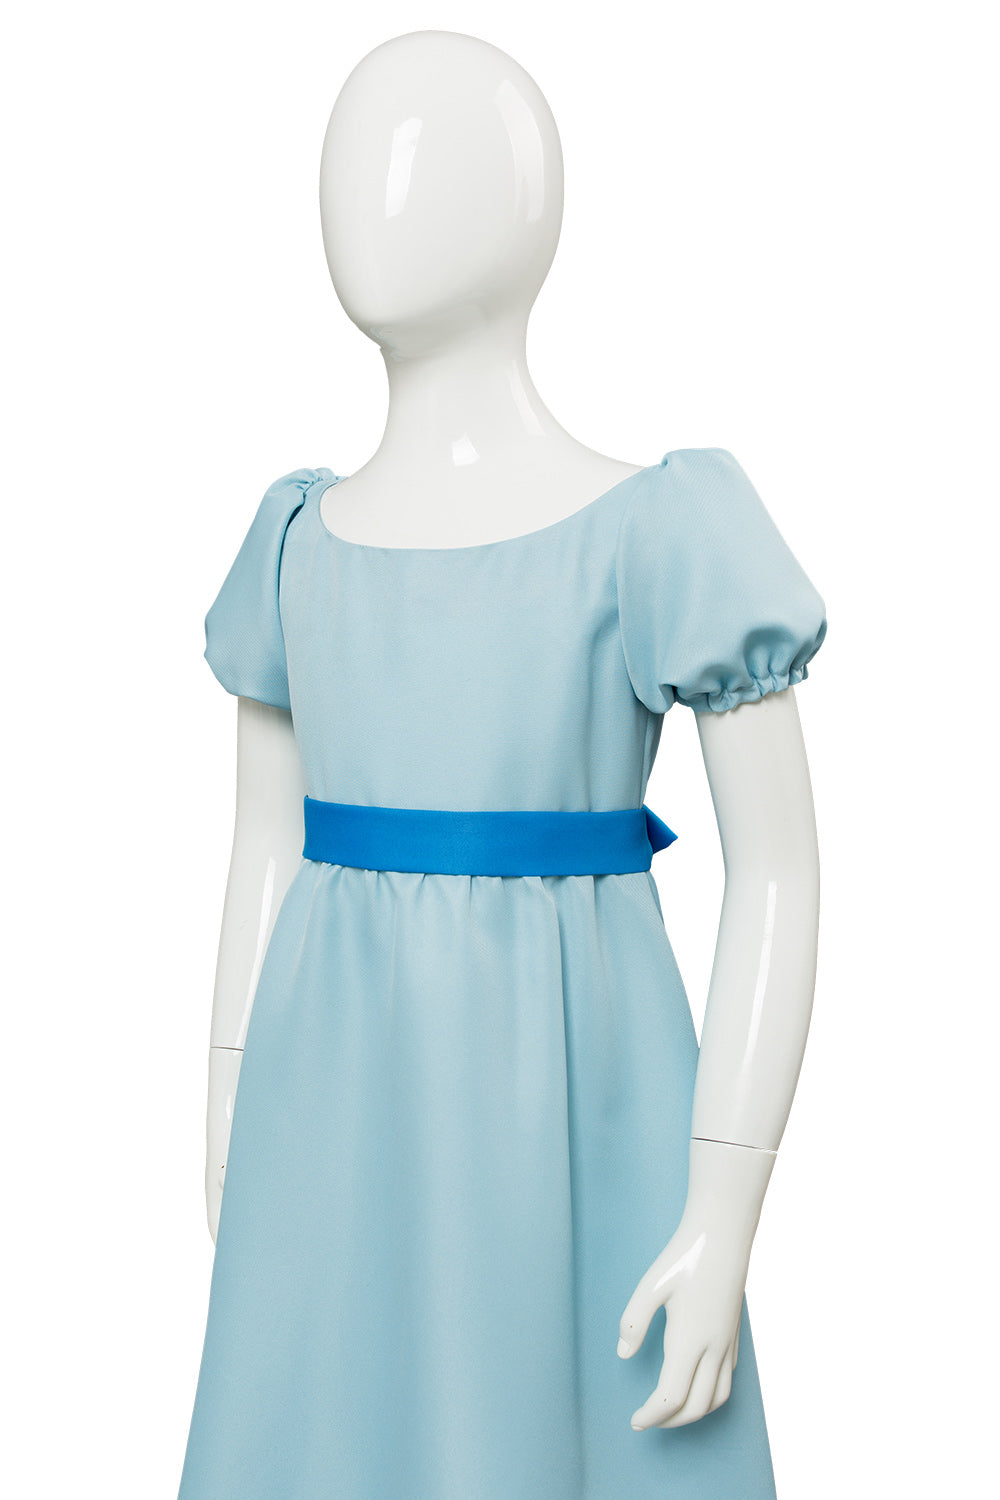 Peter Pan Nimmerland Wendy Darling Kleid Cosplay Kostüm Blau für Kinder